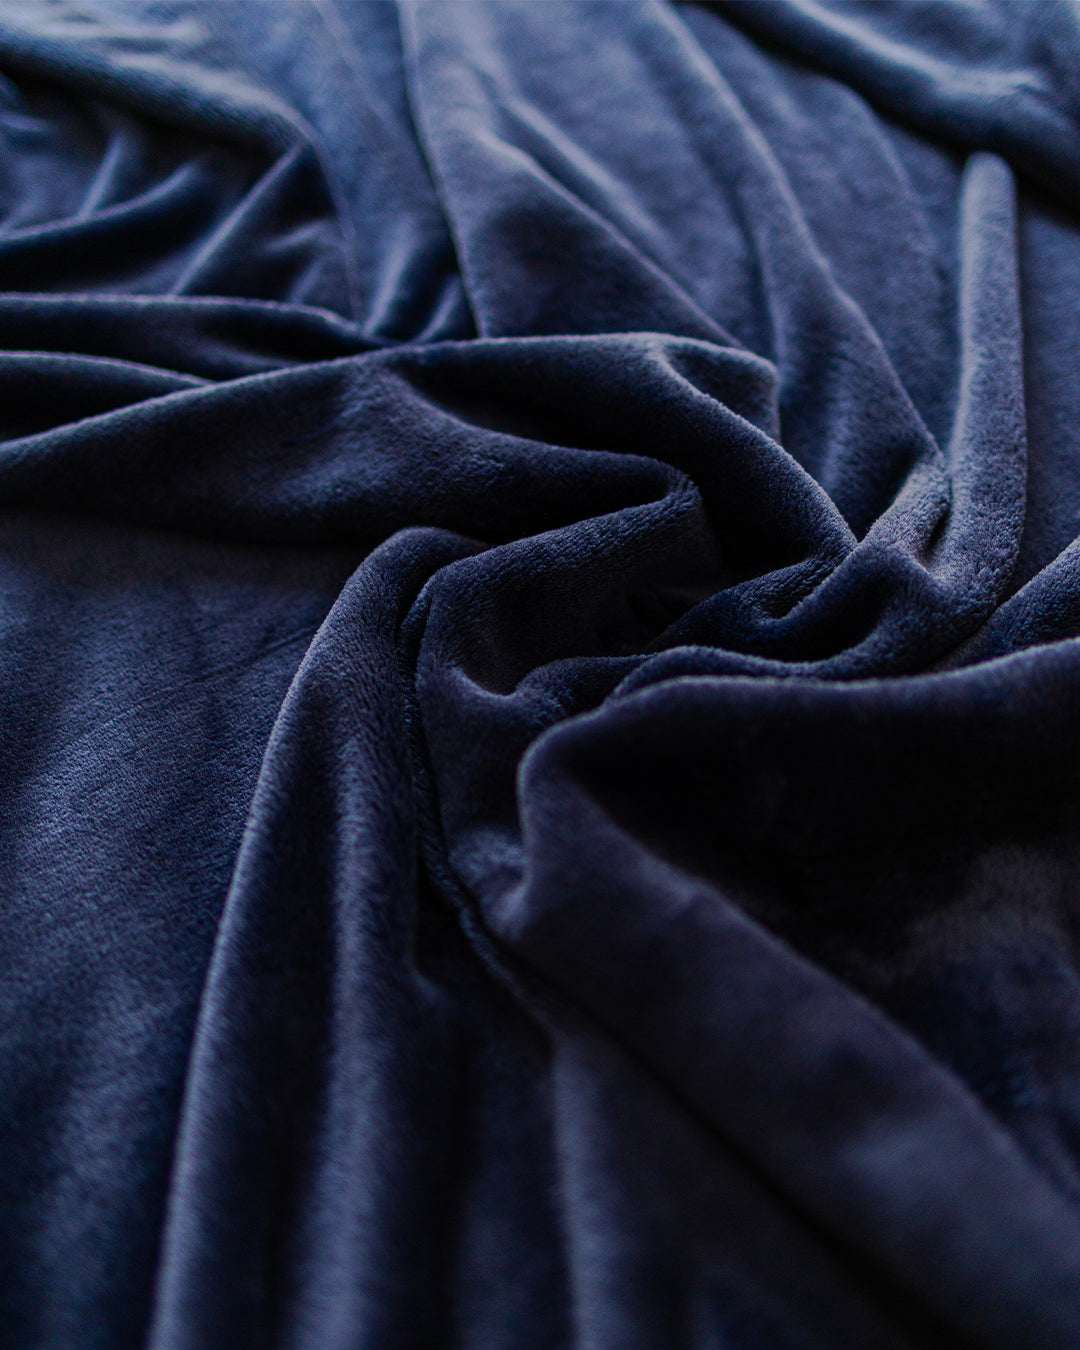 Checkered Bedsheet + Fleece Blanket